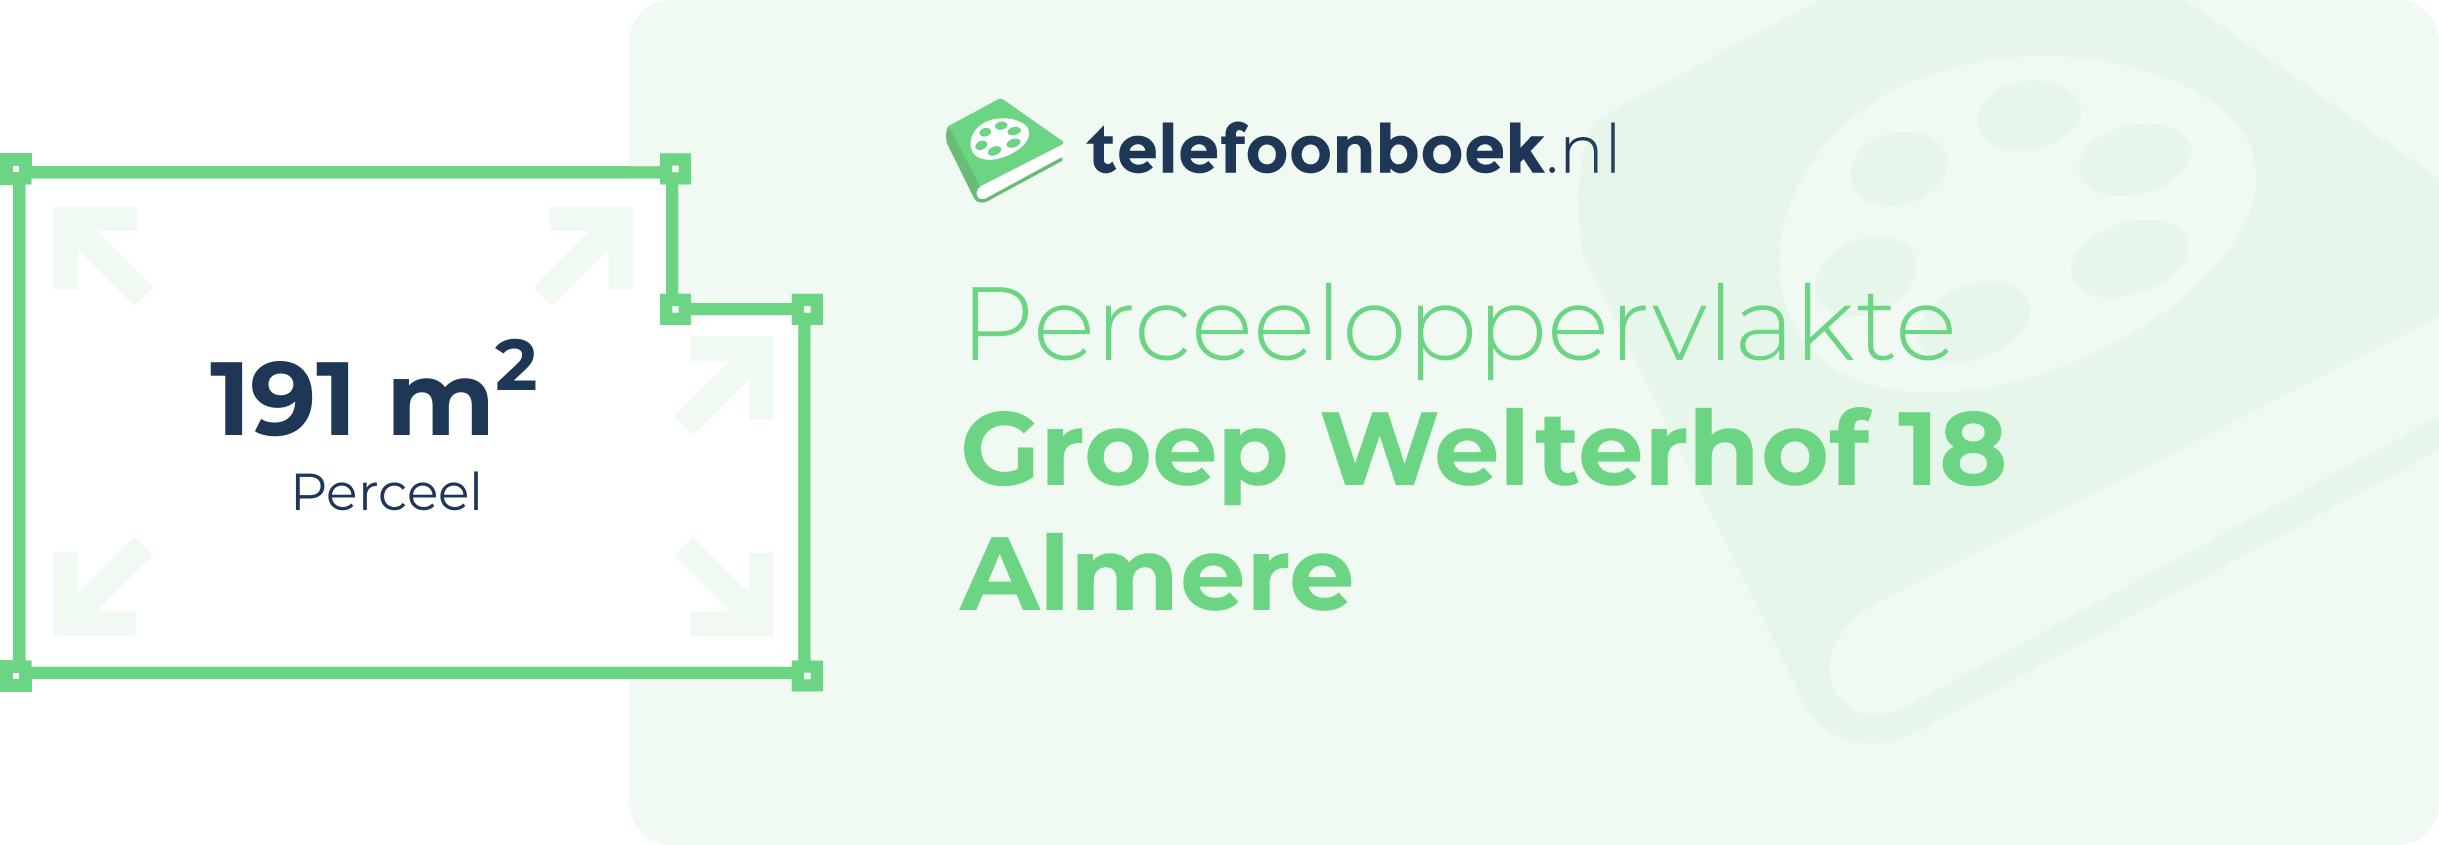 Perceeloppervlakte Groep Welterhof 18 Almere